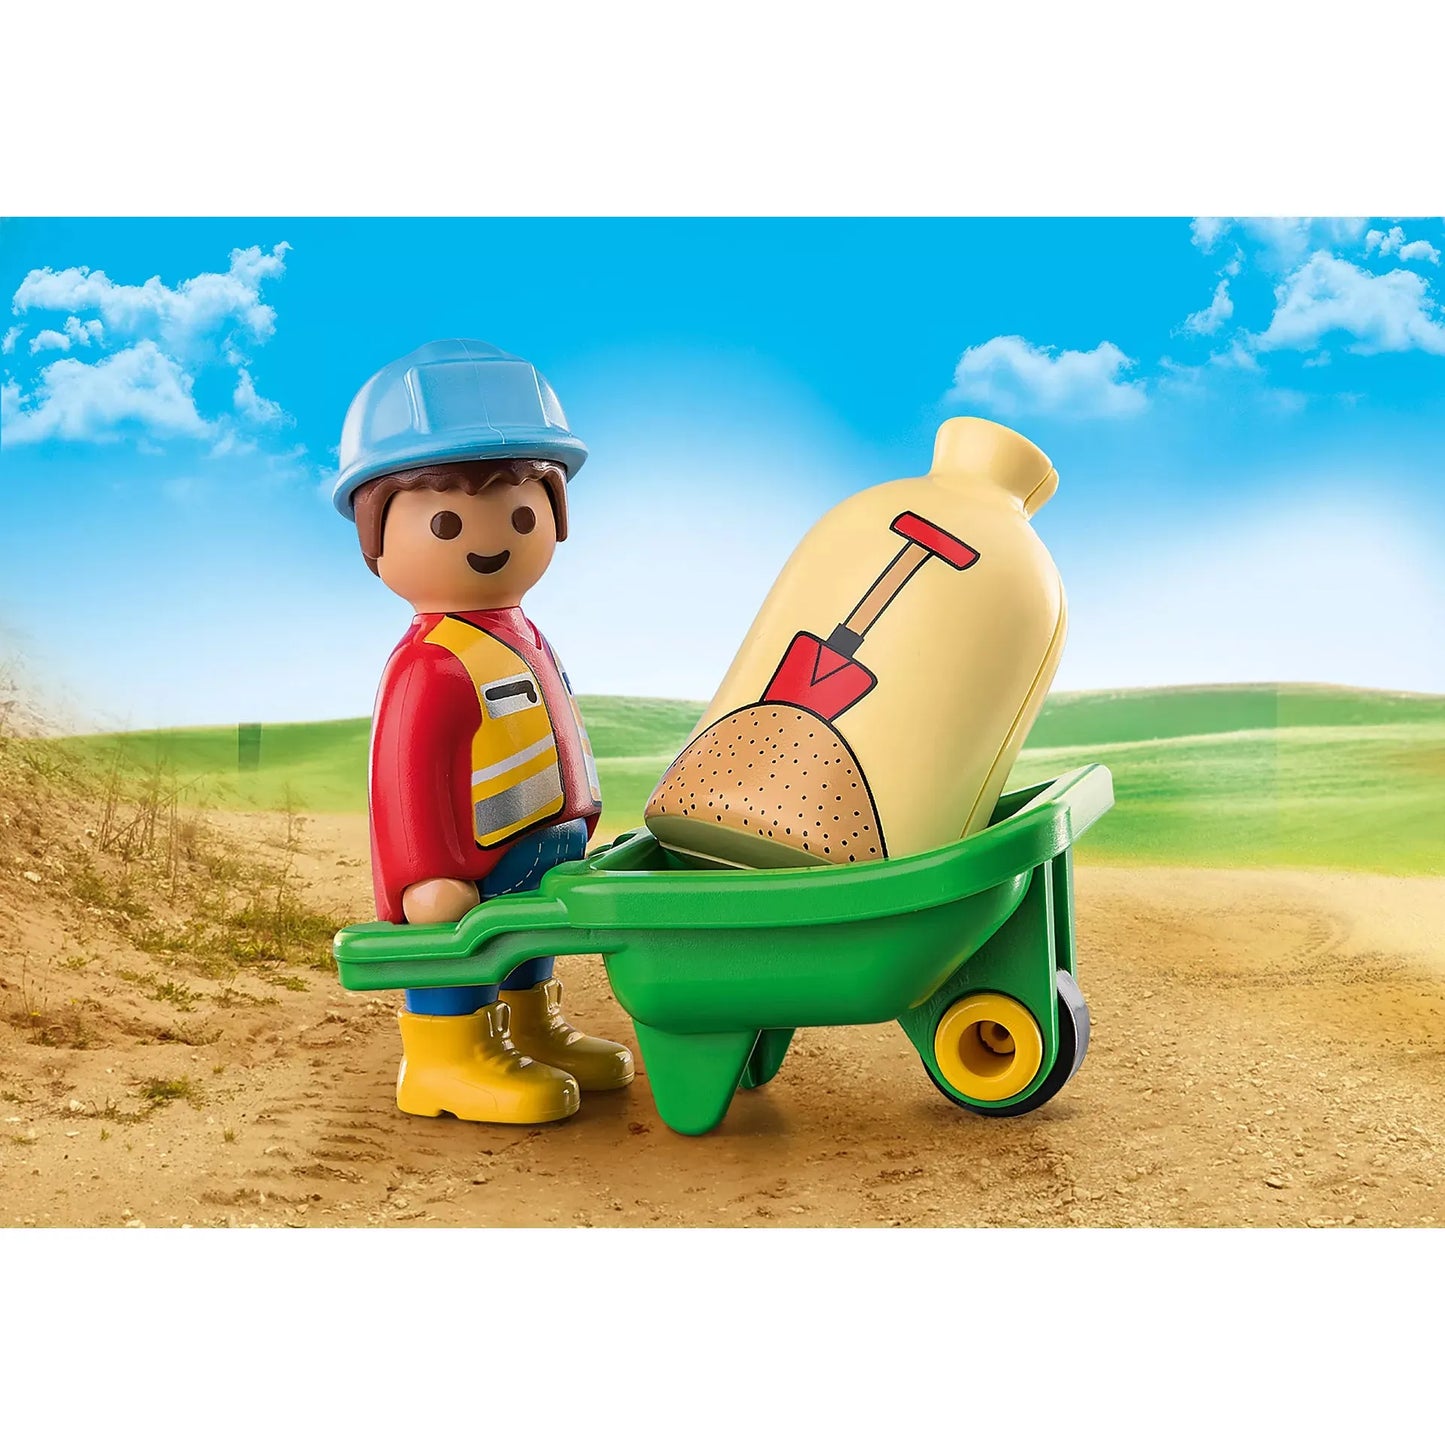 Playmobil 1•2•3 Construction Worker with Wheelbarrow